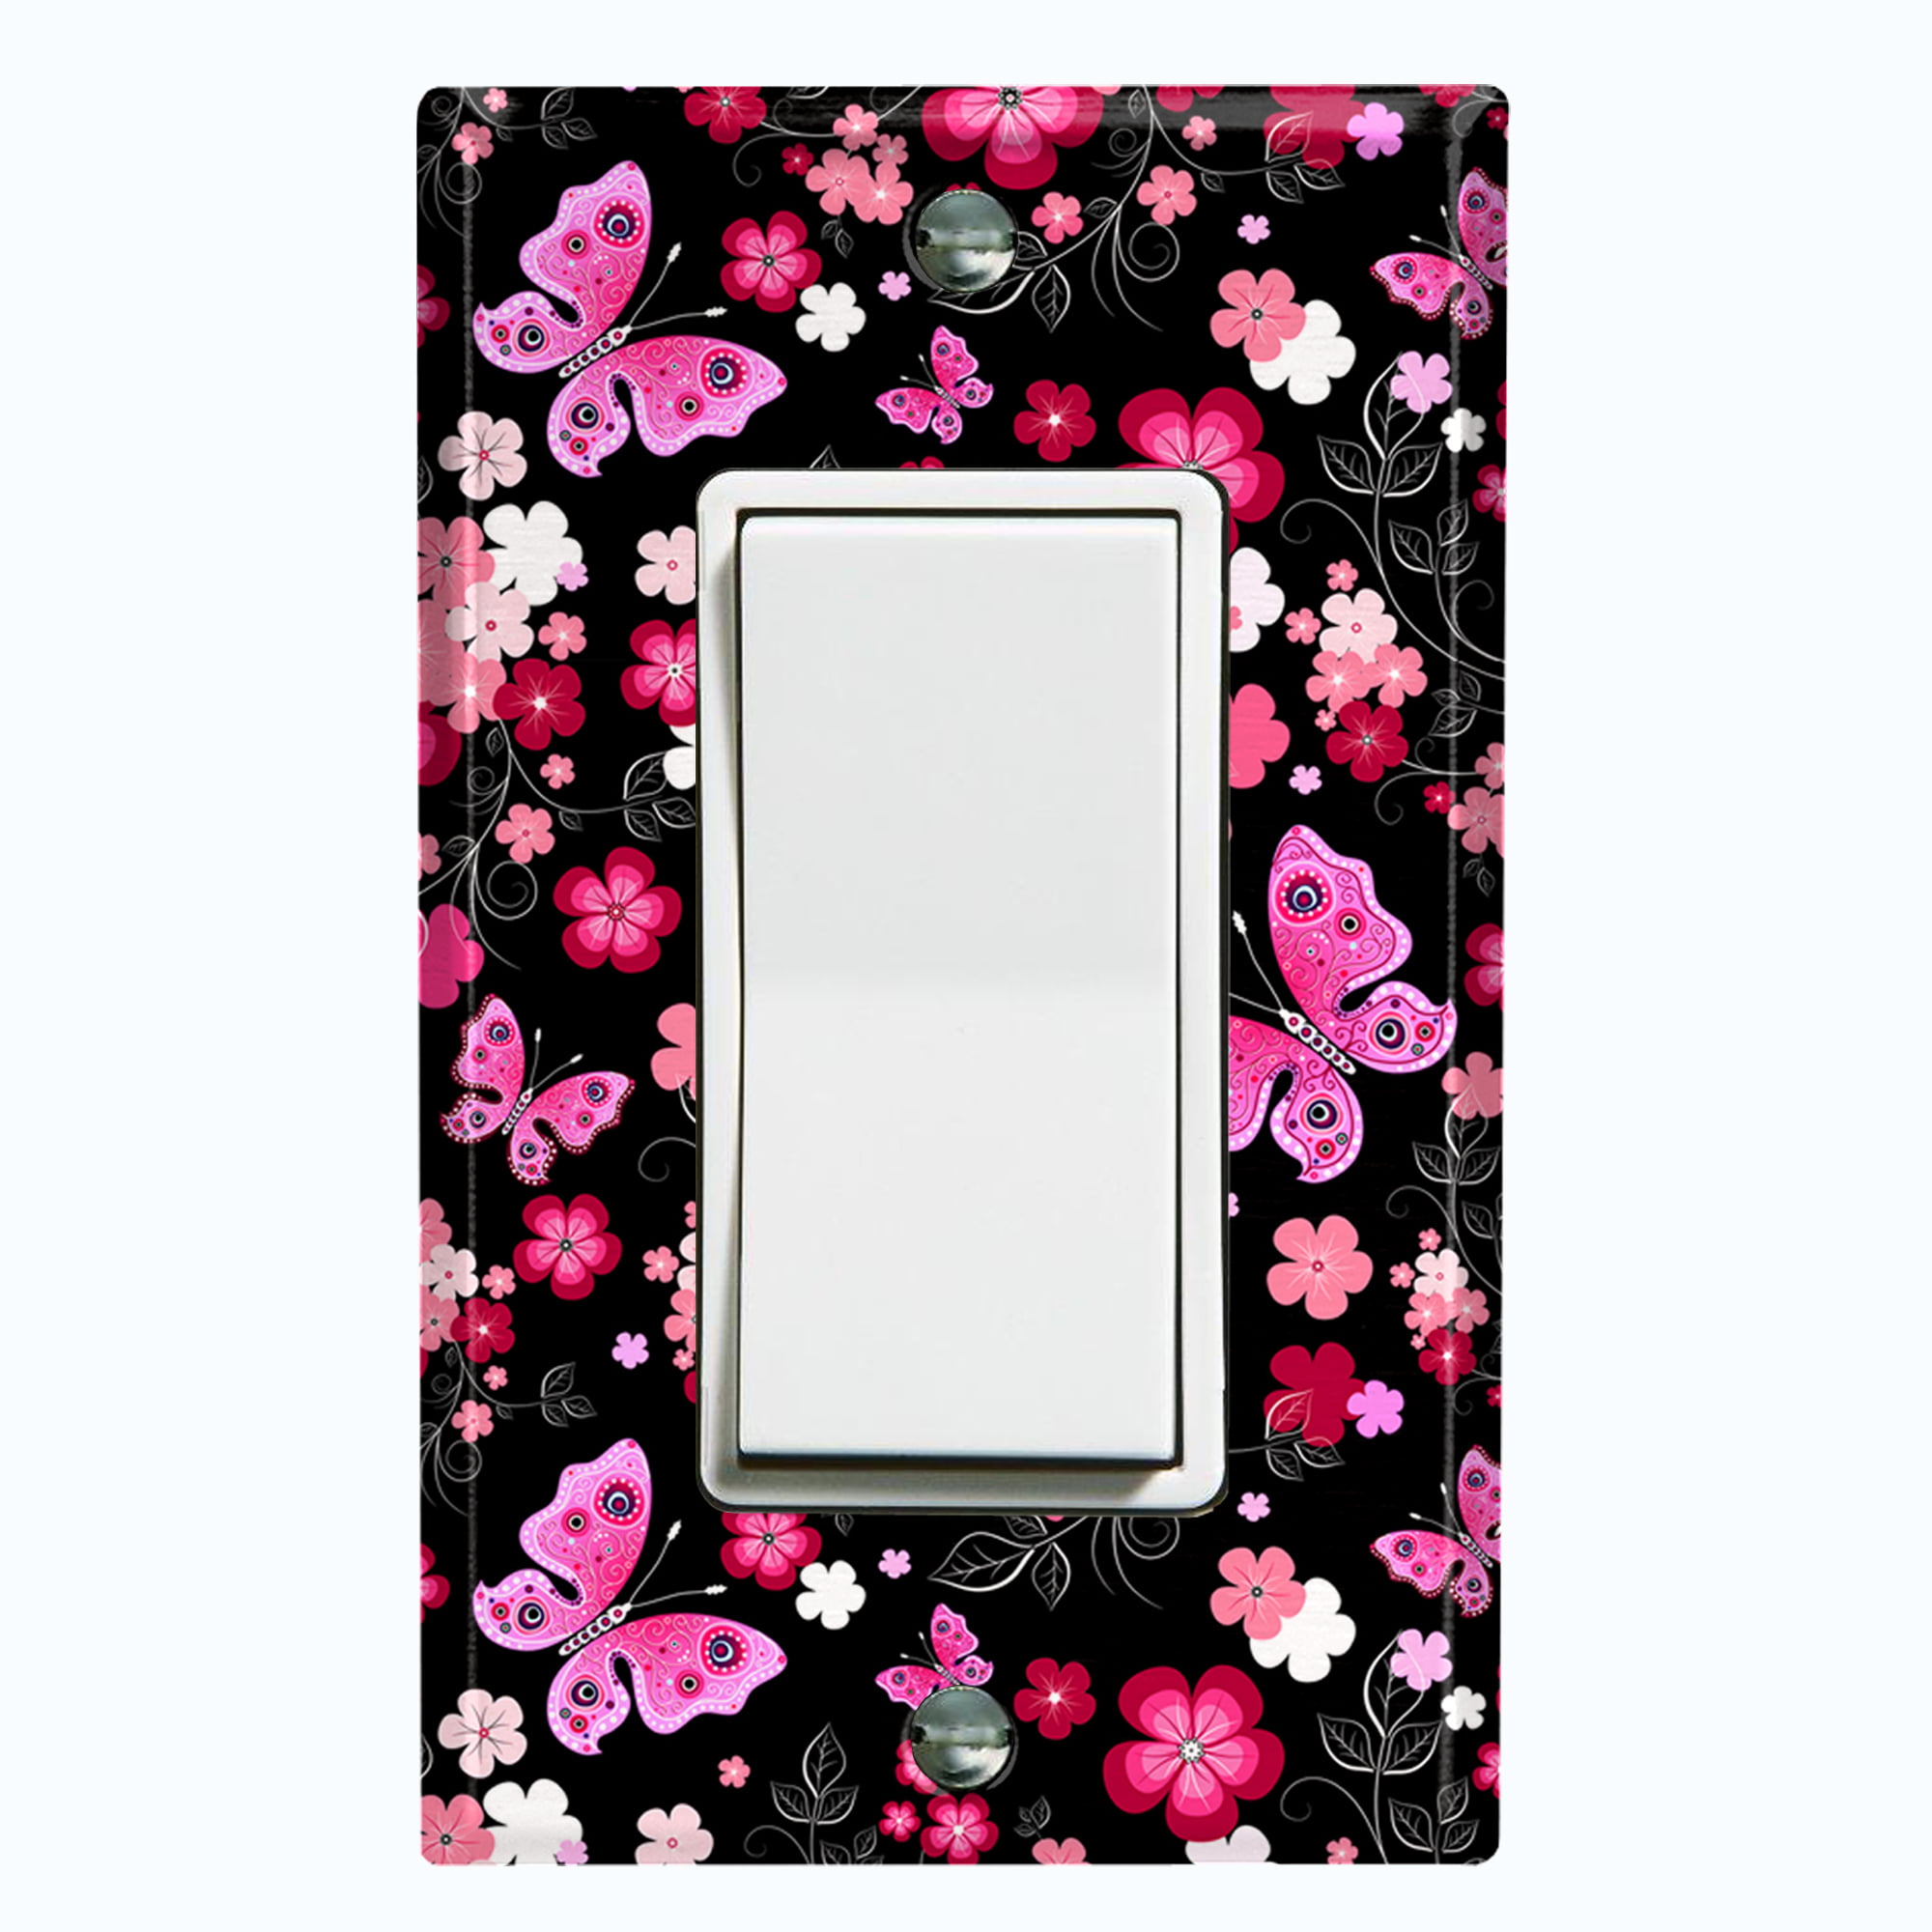 Metal Light Switch Plate Cover Butterflies Pink Green Flowers Home Decor 